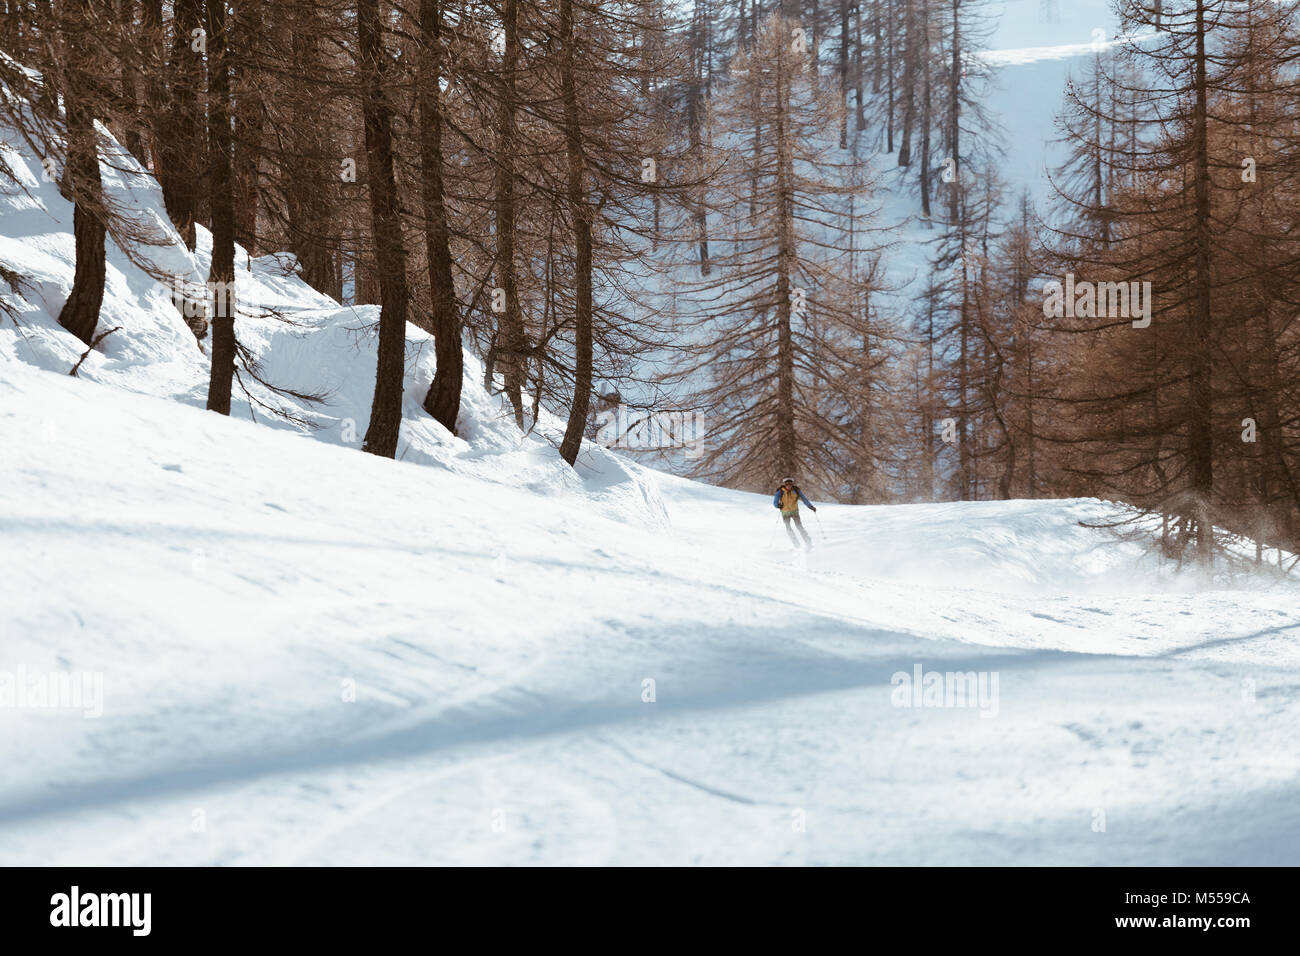 Skier ski den Hang hinunter in den Wald - Abfahrt in den hohen Bergen. Stockfoto